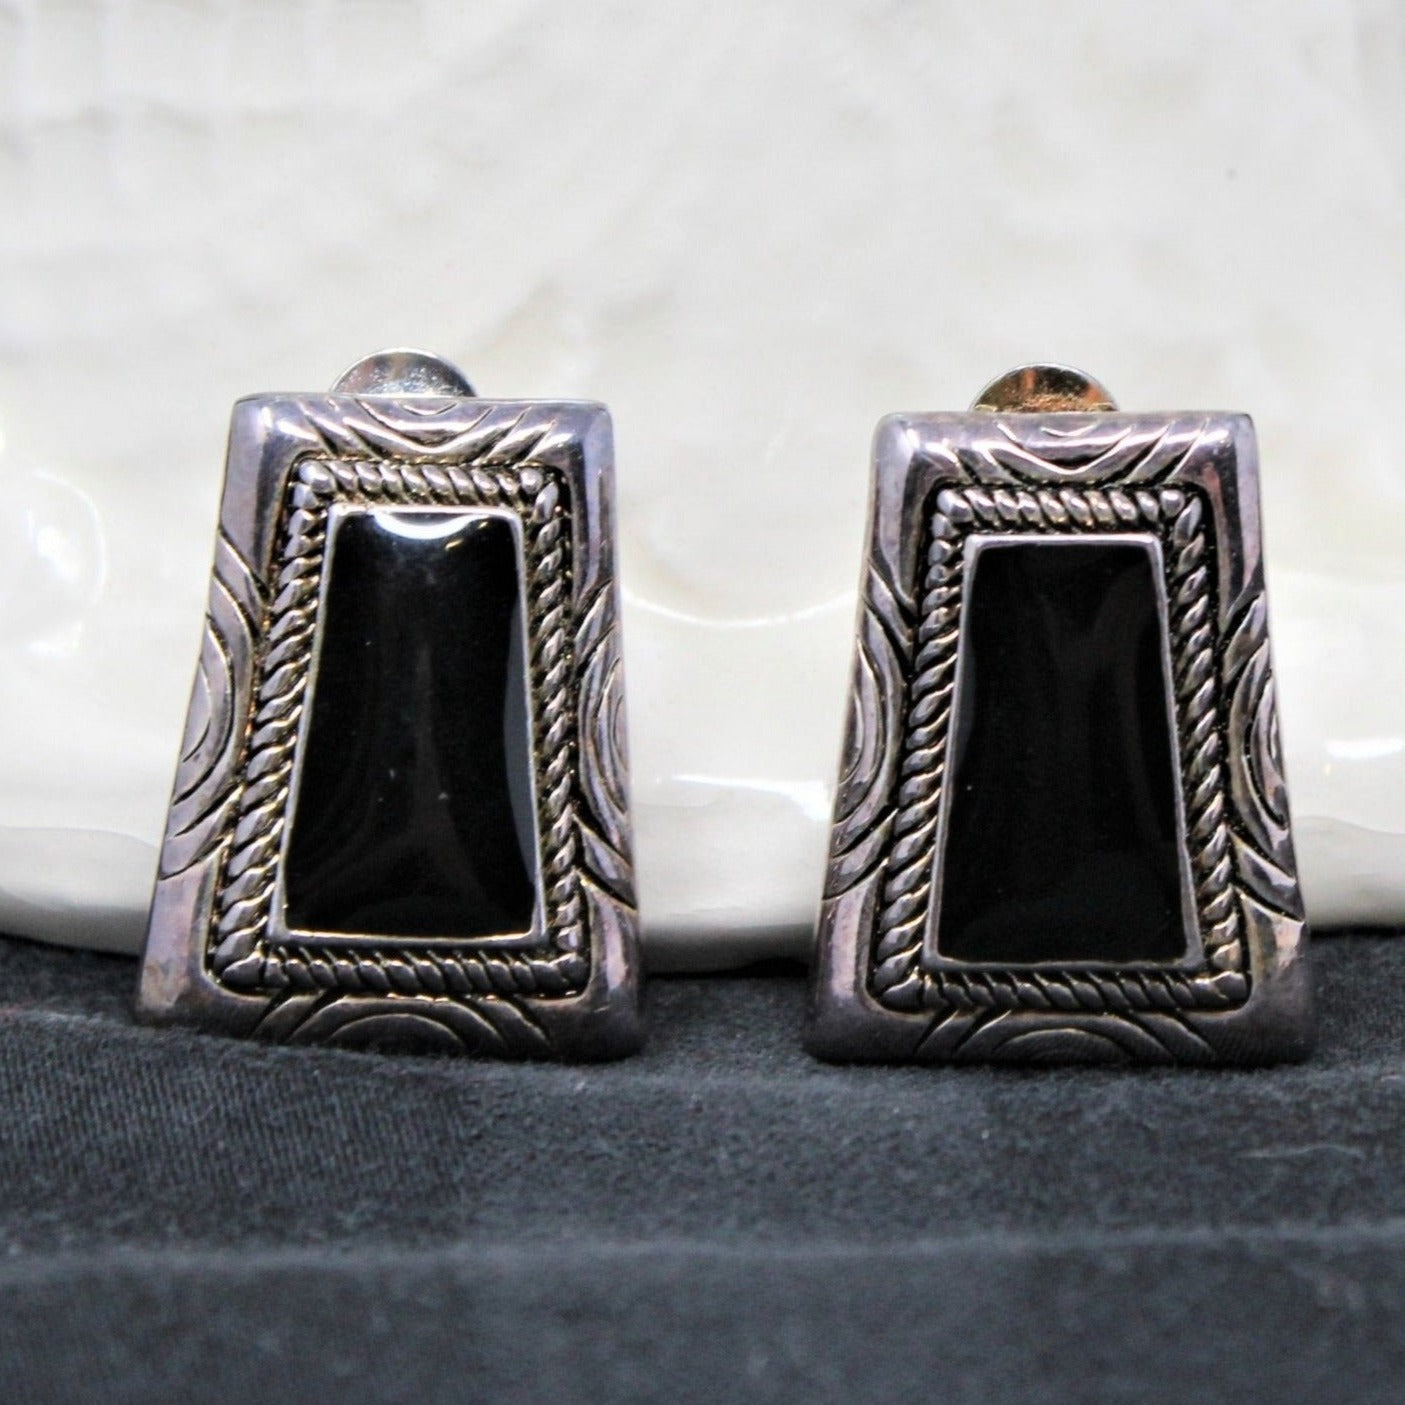 Earrings, Premier Designs, Black Stone on Silver, Clips, 1990's, Vintage